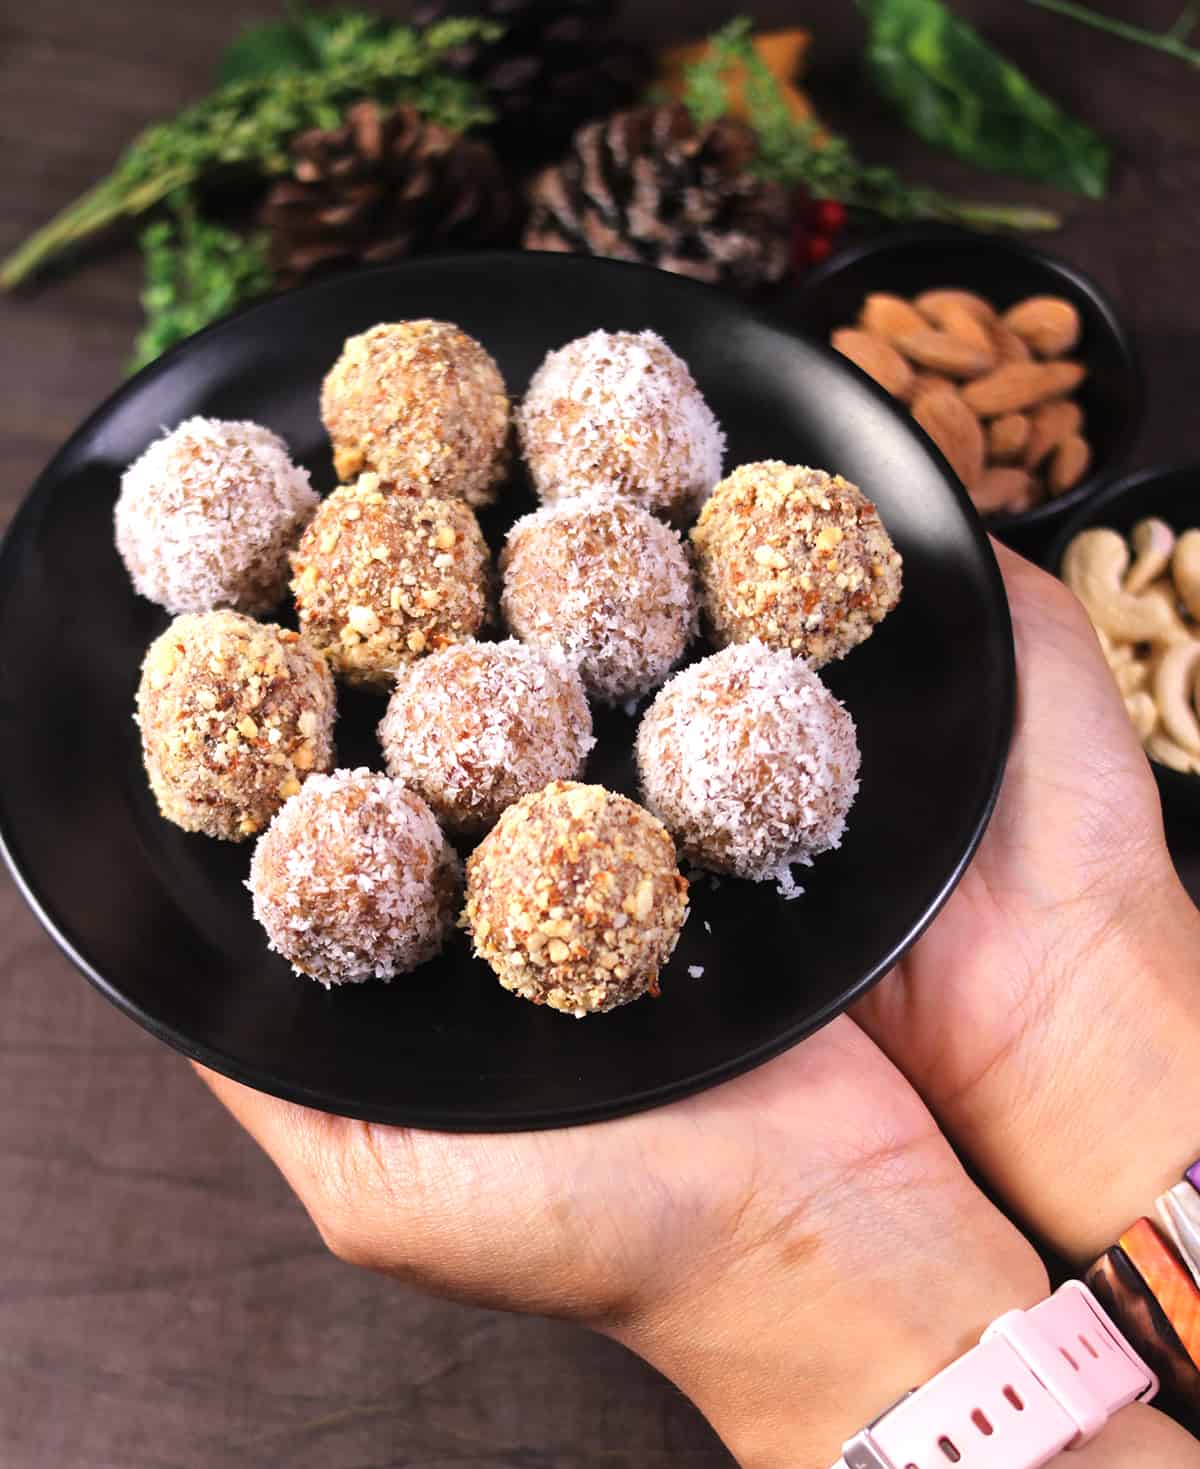 Festive themed no bake desserts - Coconut date balls (Christmas energy balls, holiday bliss balls).